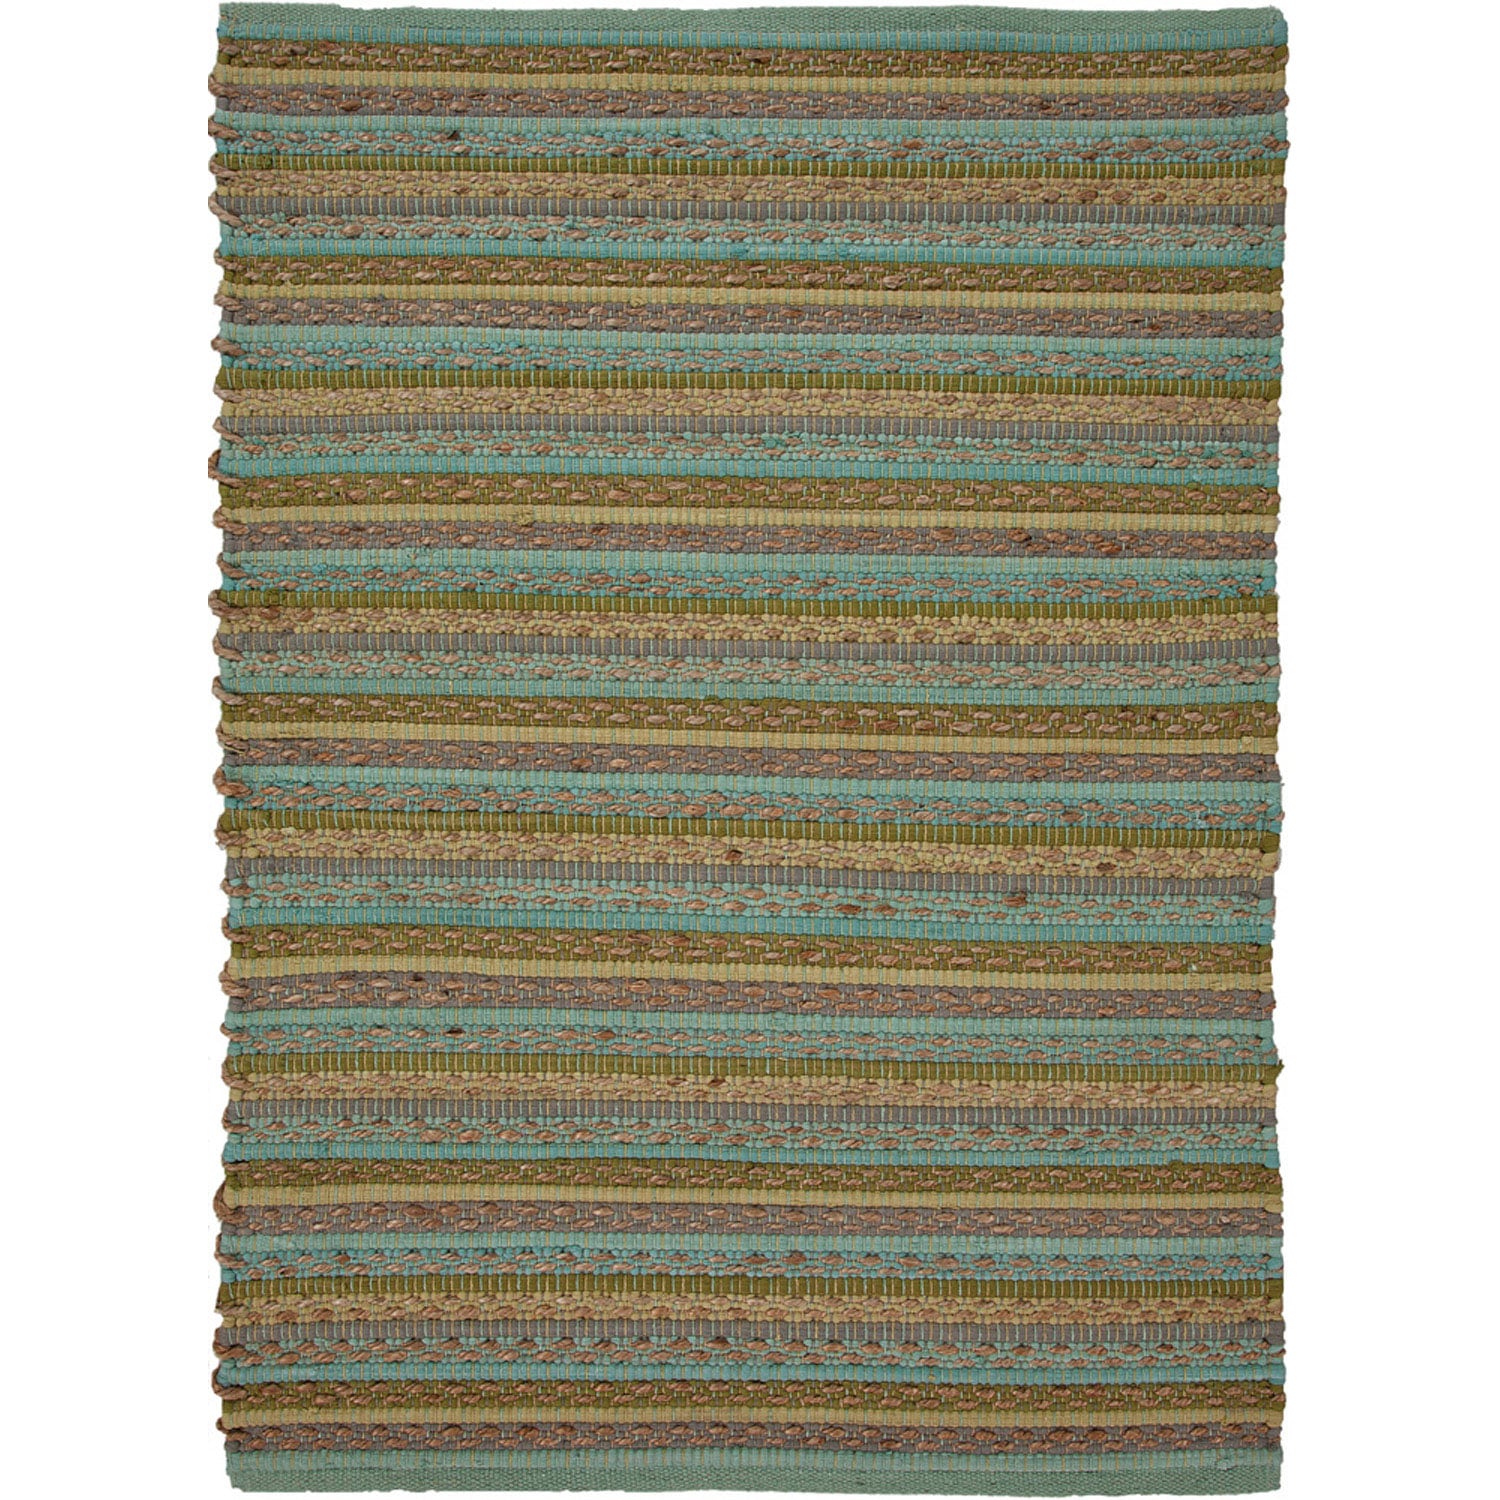 Handwoven Naturals Stripe Pattern Multicolor Cotton blend Area Rug (2 X 3)